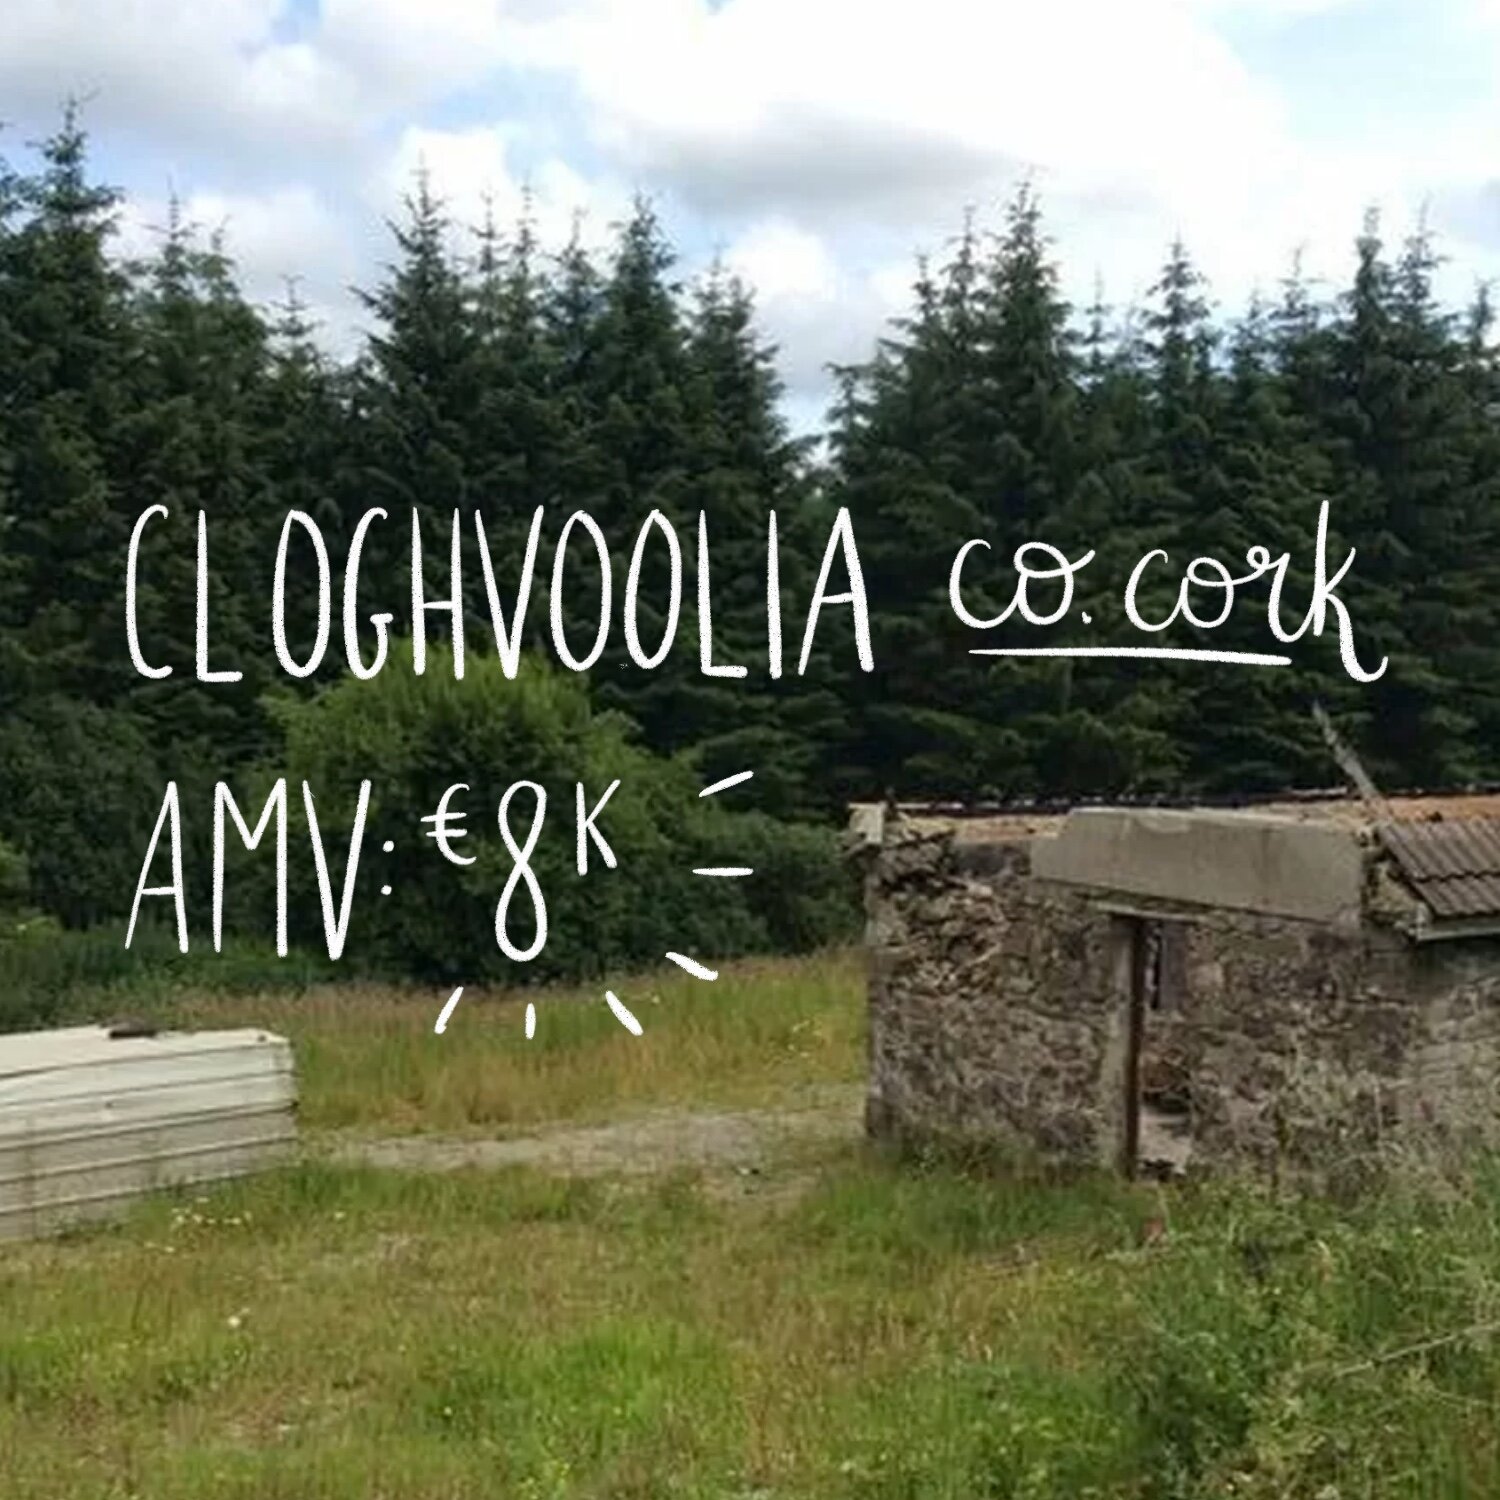 Cloghvoolia, Killavullen, Mallow, Co. Cork. €8k